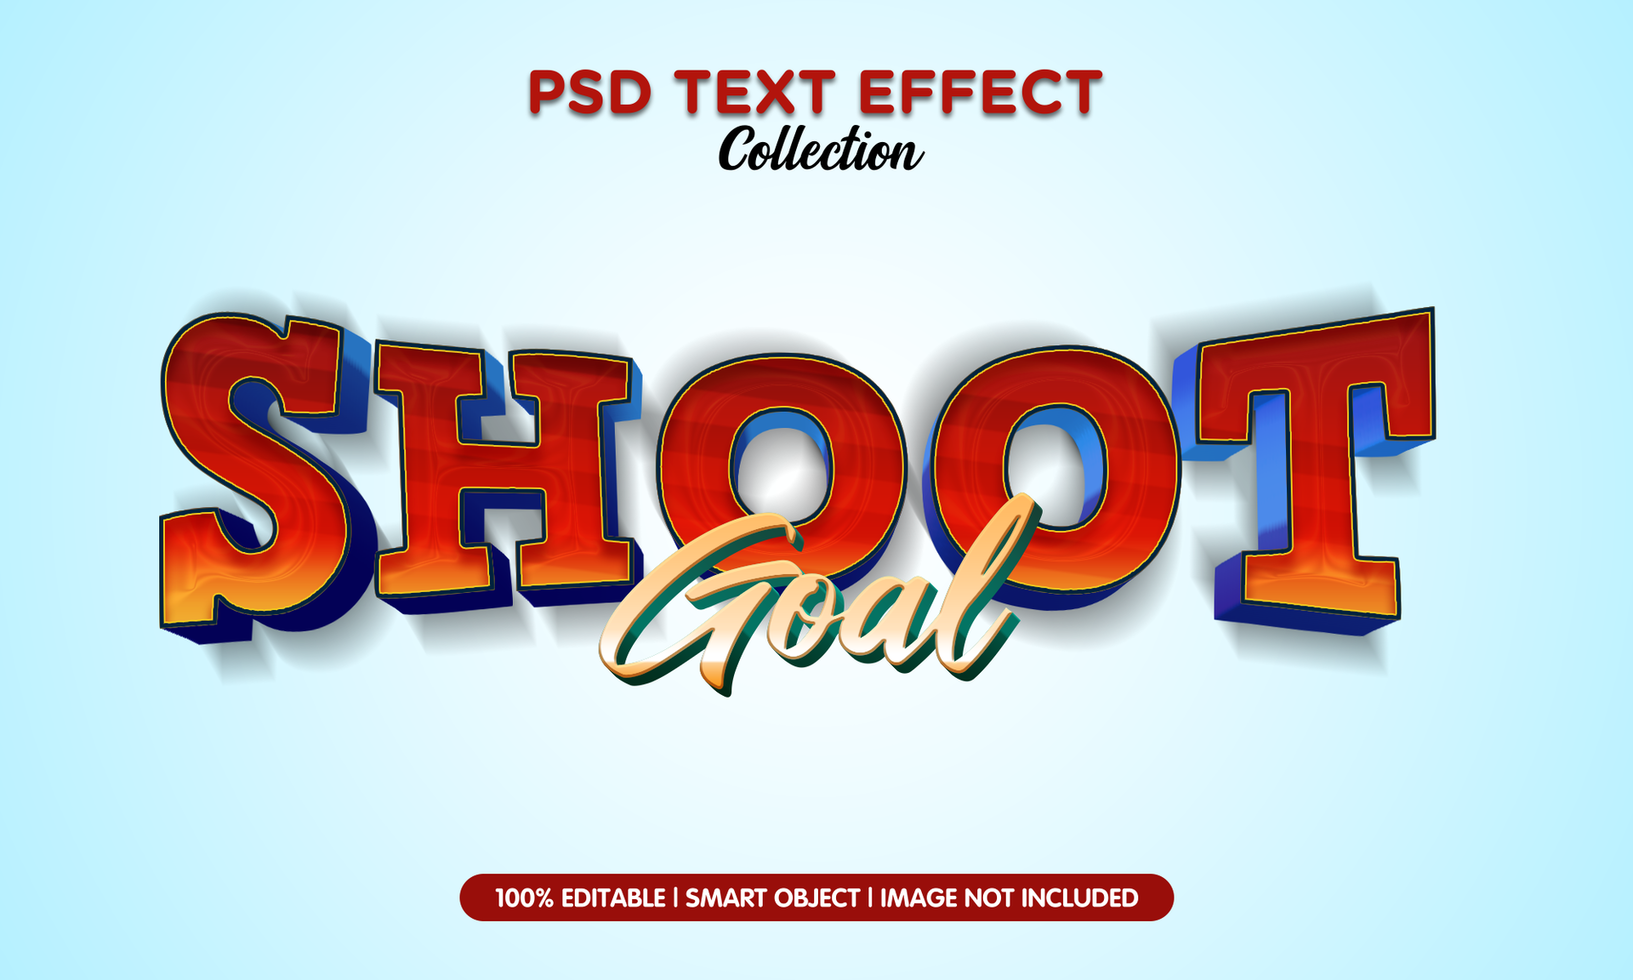 shoot and goal world football championship 3d text effect template psd